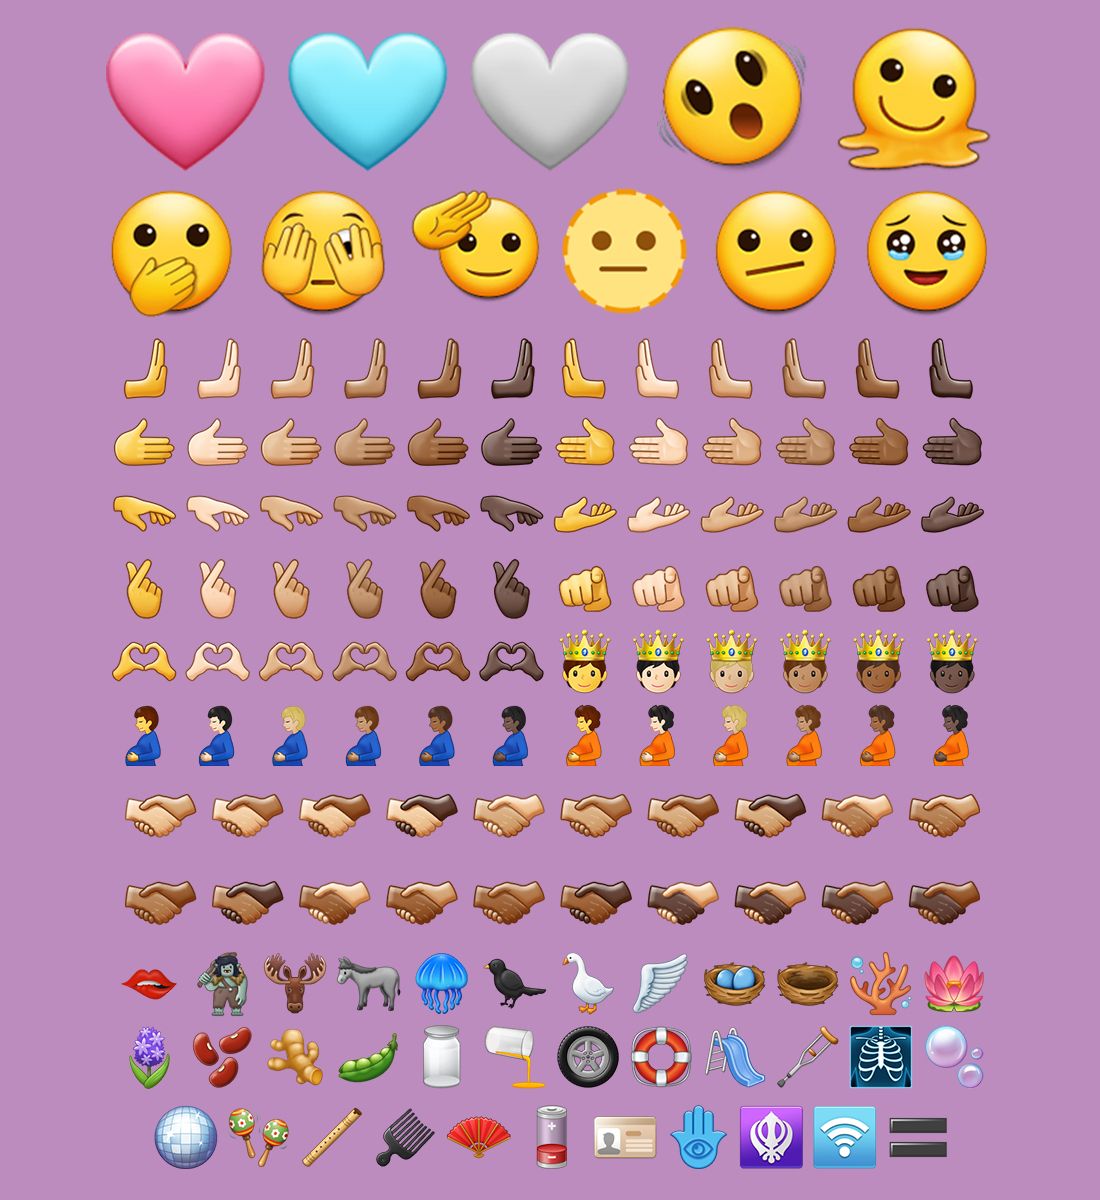 emojis for samsung phones